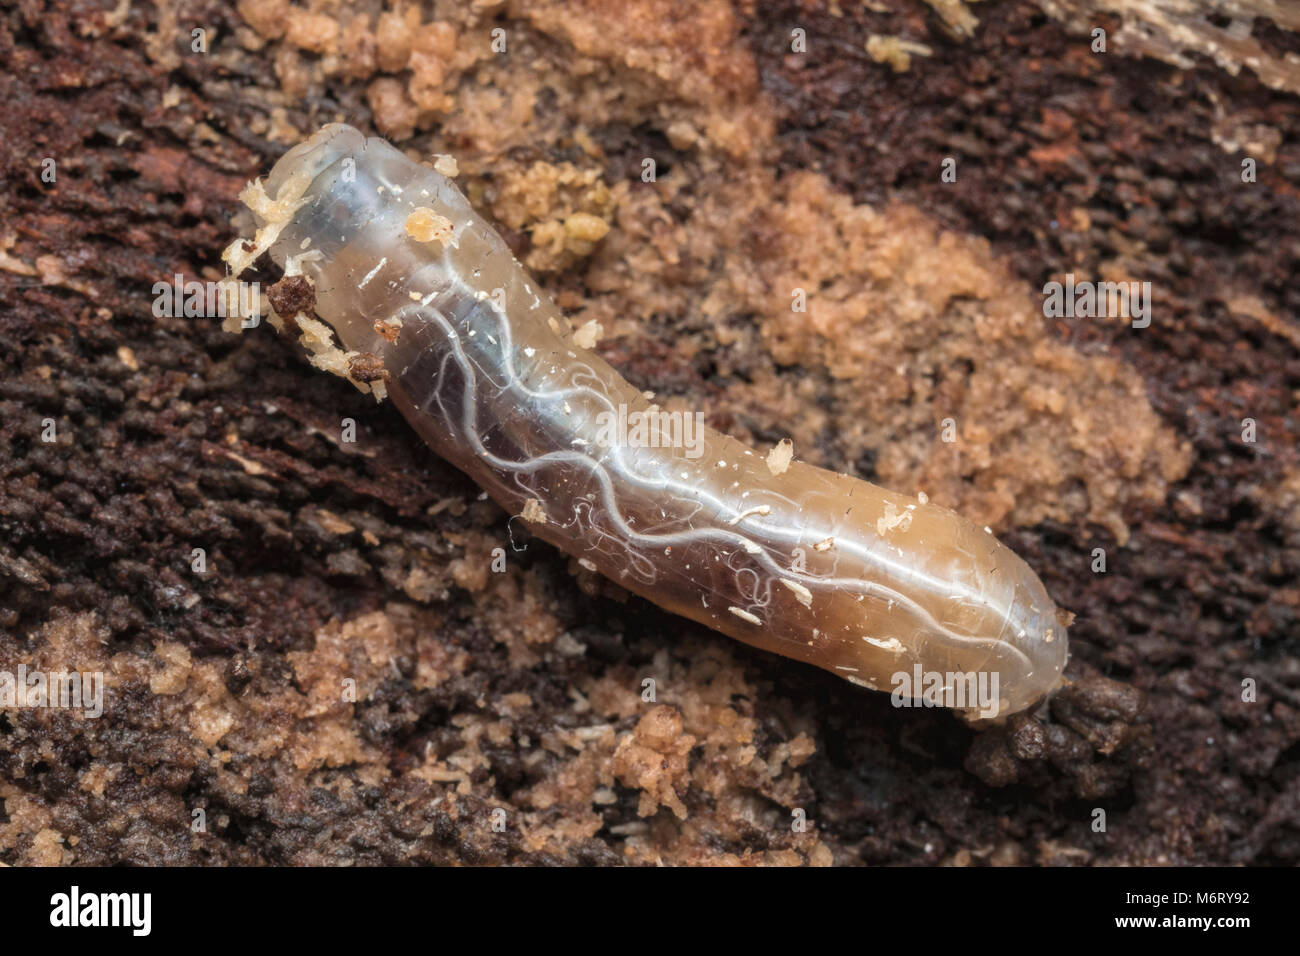 Cranefly larva or leatherjacket (Tipulidae) showing the breathing apparatus. Tipperary, Ireland Stock Photo